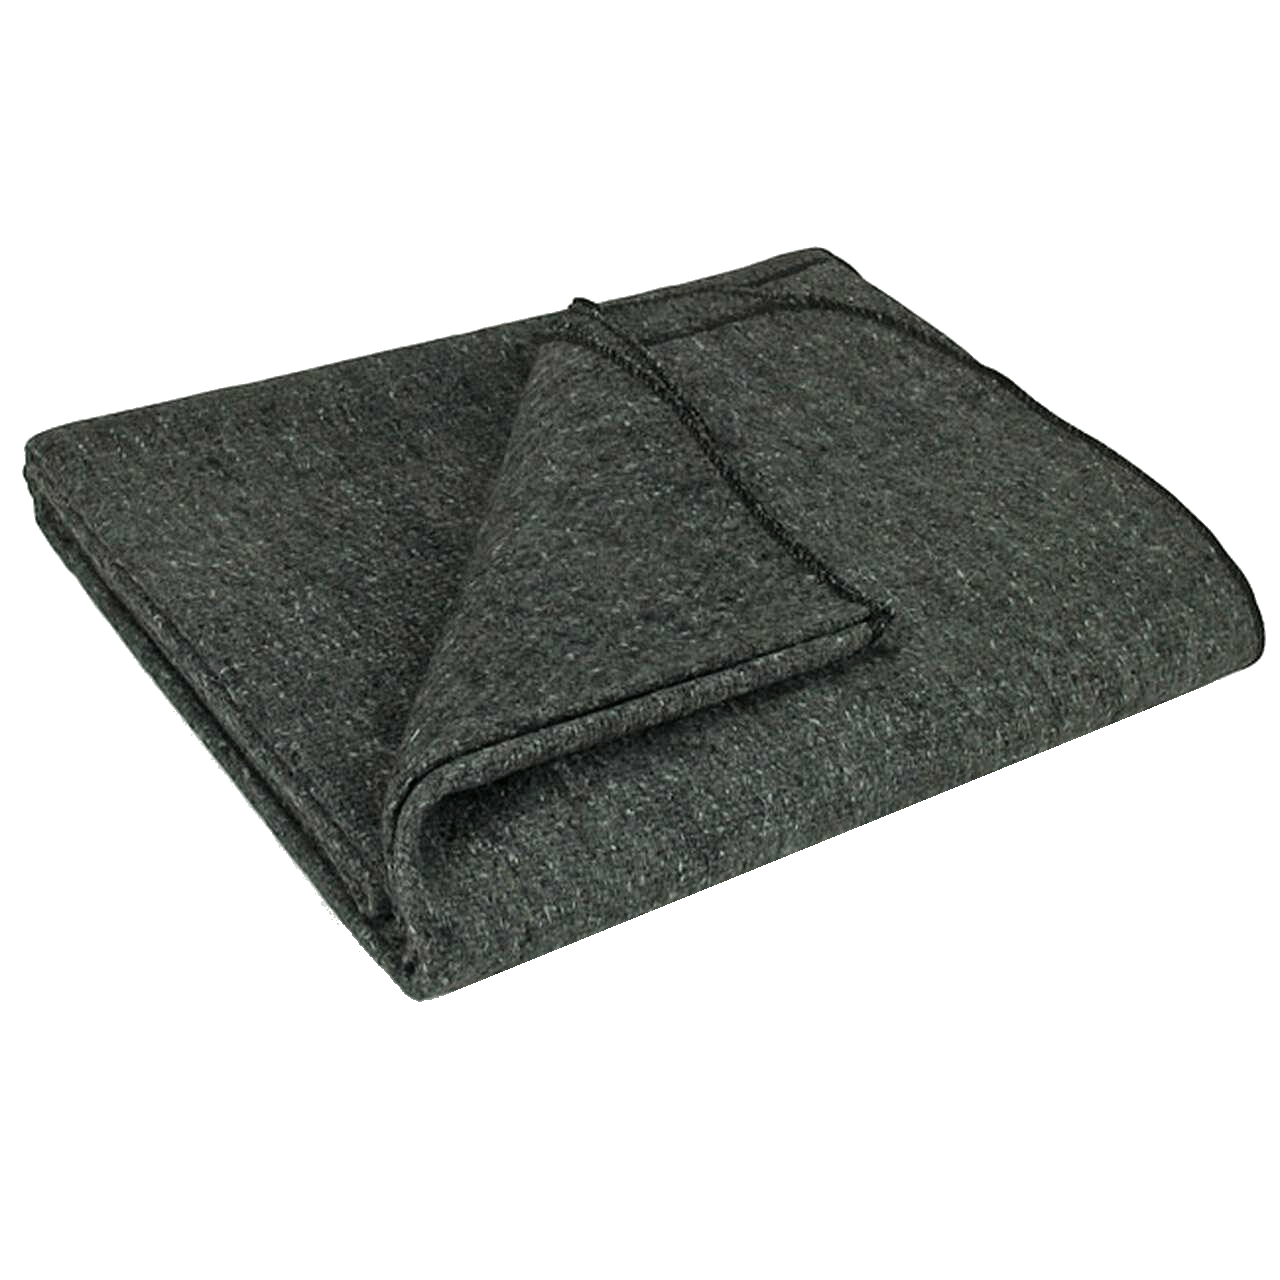 Classic Charcoal Grey 70% Wool Blanket | 62 in x 84 in | GI HAWK